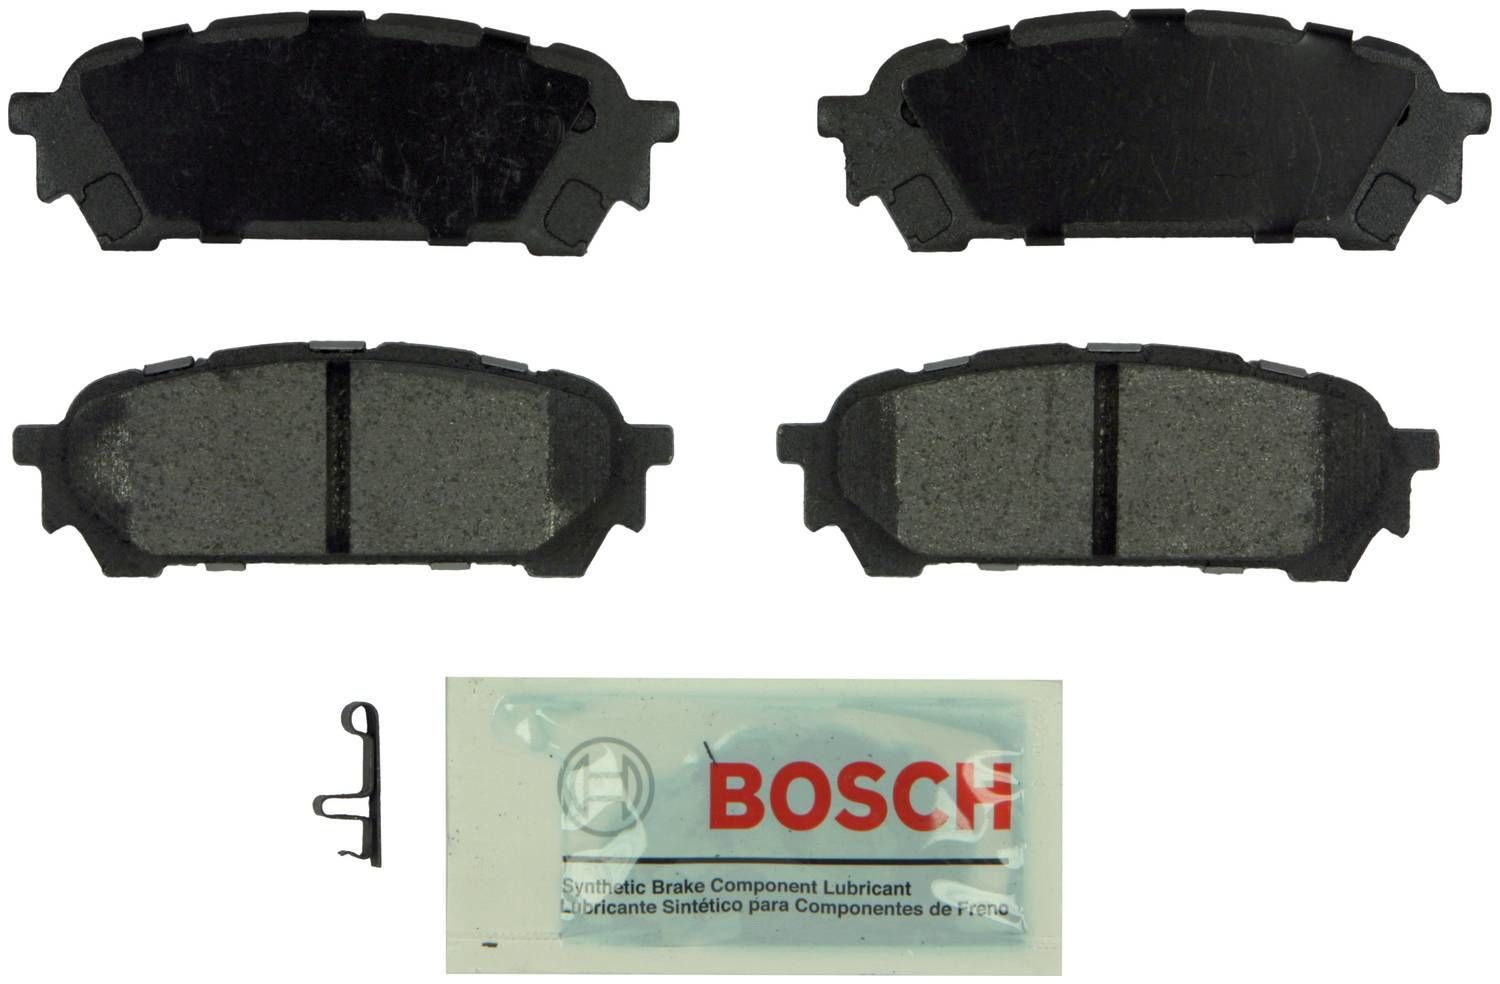 BOSCH BRAKE - Bosch Blue Ceramic Brake Pads (Rear) - BQC BE1004